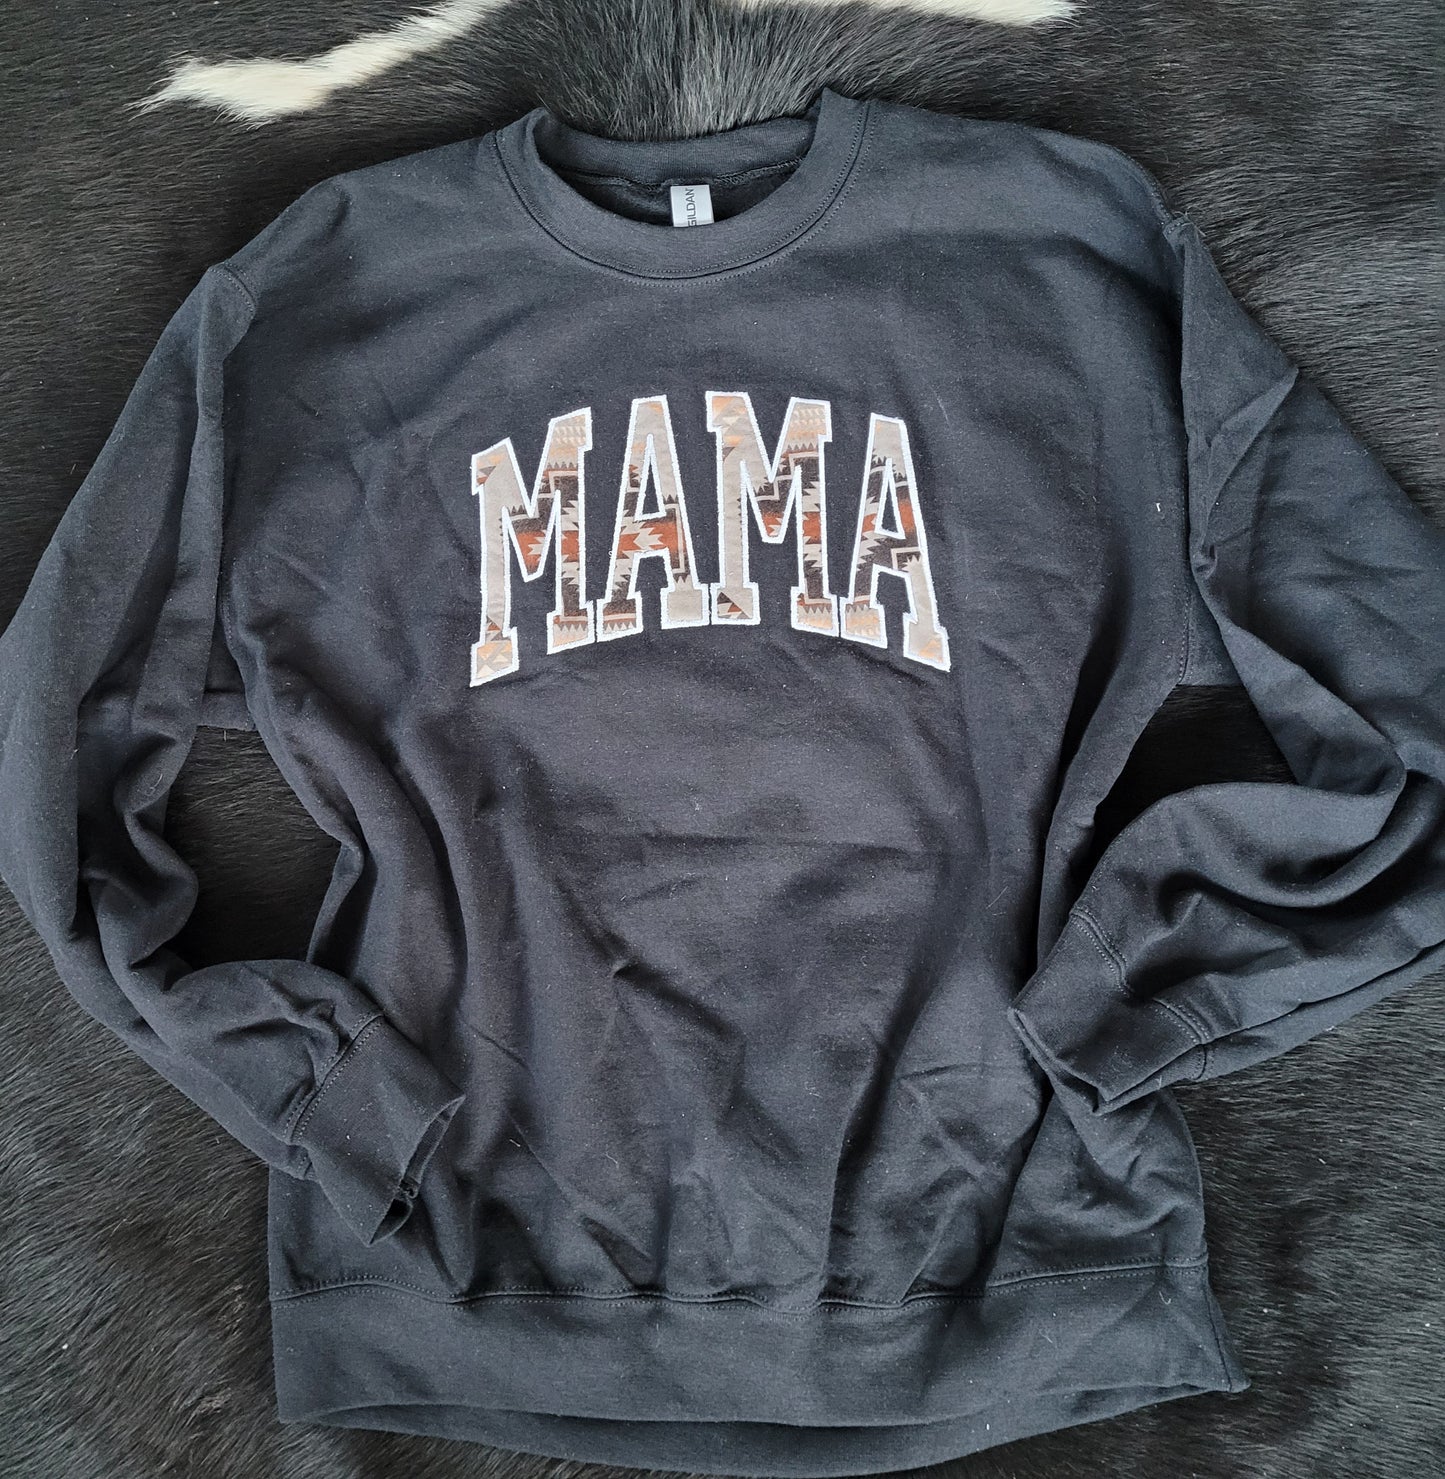 Mama Pendleton black sweatshirt